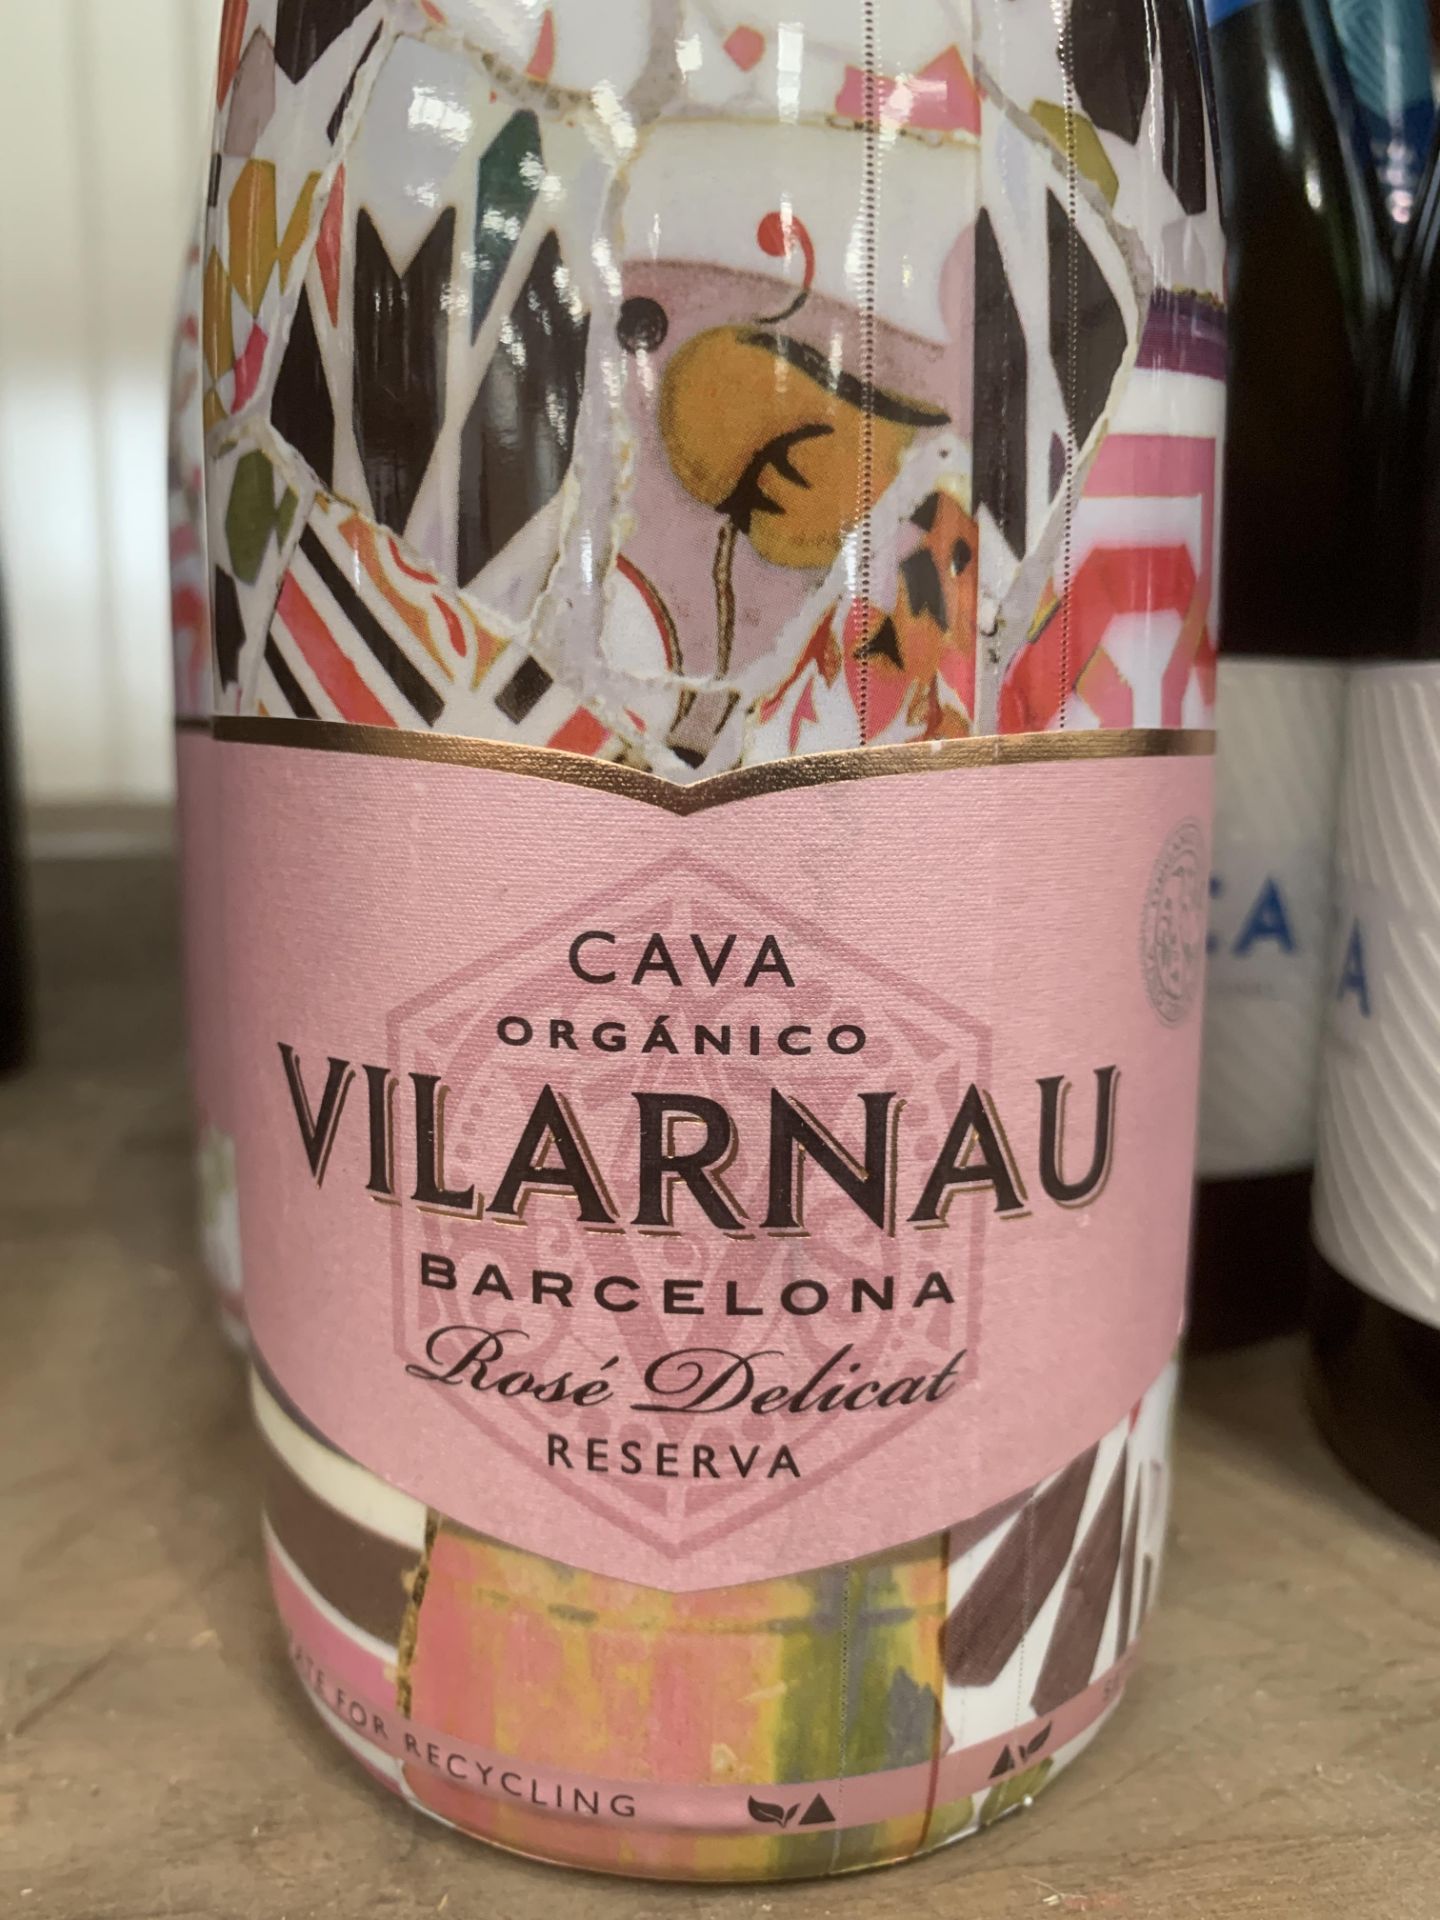 8x Bottles of Cava - 5x Toca, 3x Vilarnau - Image 4 of 5